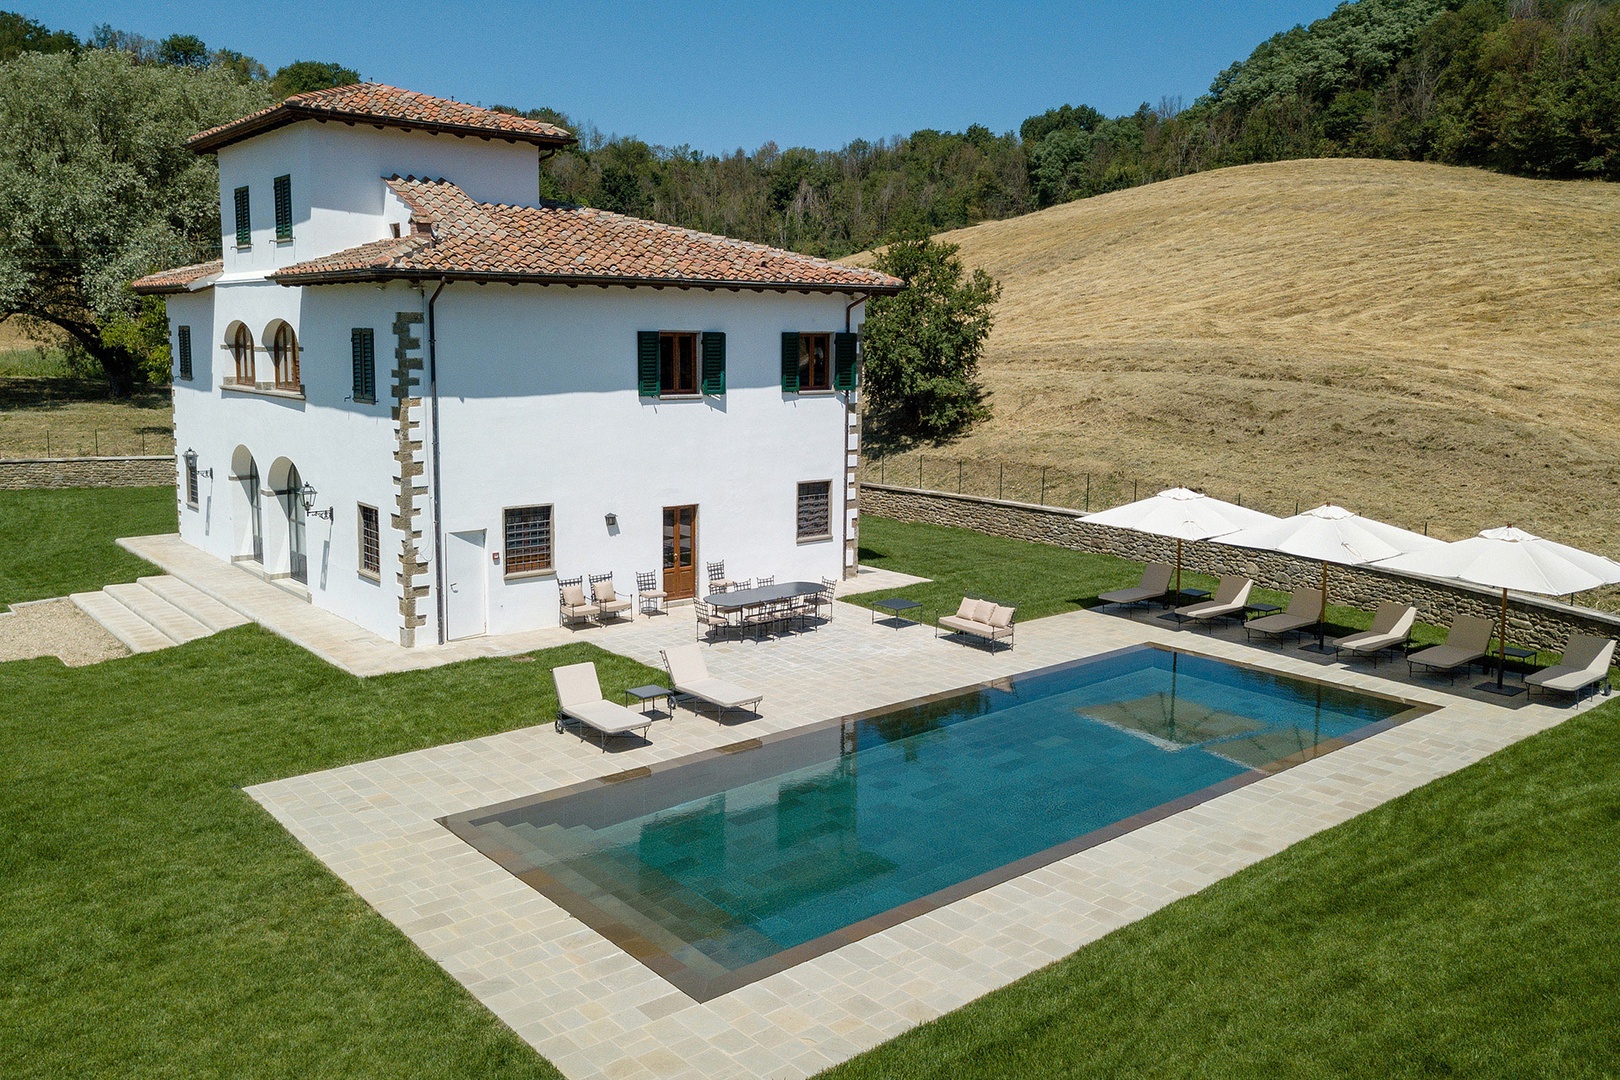 Take a dip in the Maragone villa's refreshing pool.